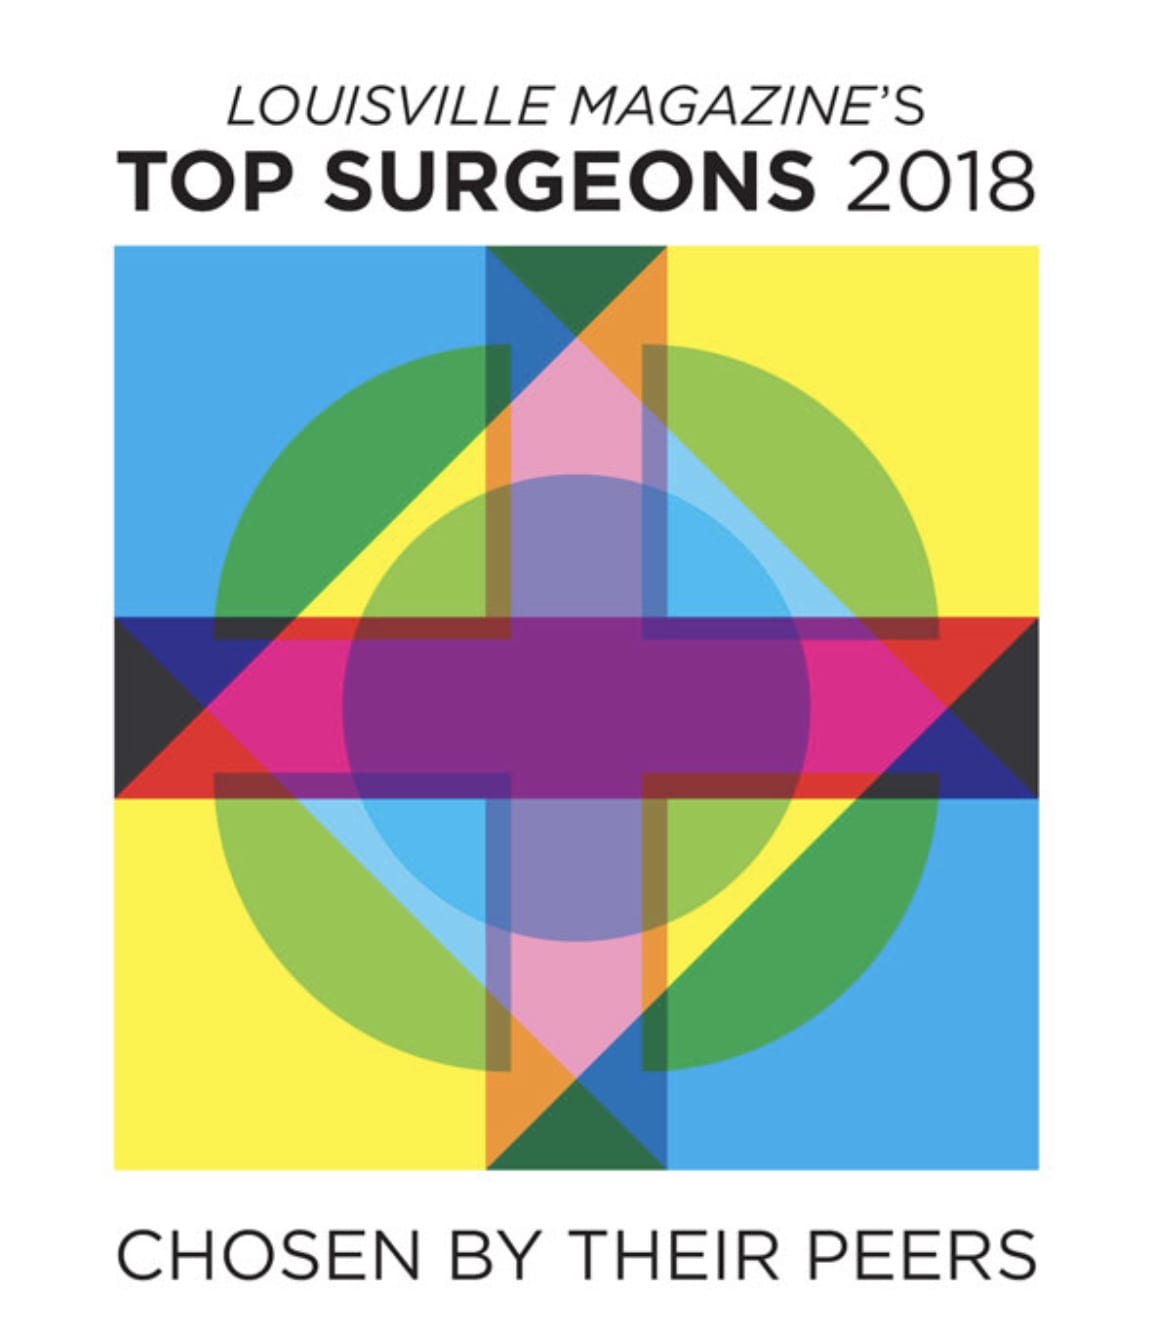 Louisville Magazine's Top Surgeons 2018 - Chosen by their peers